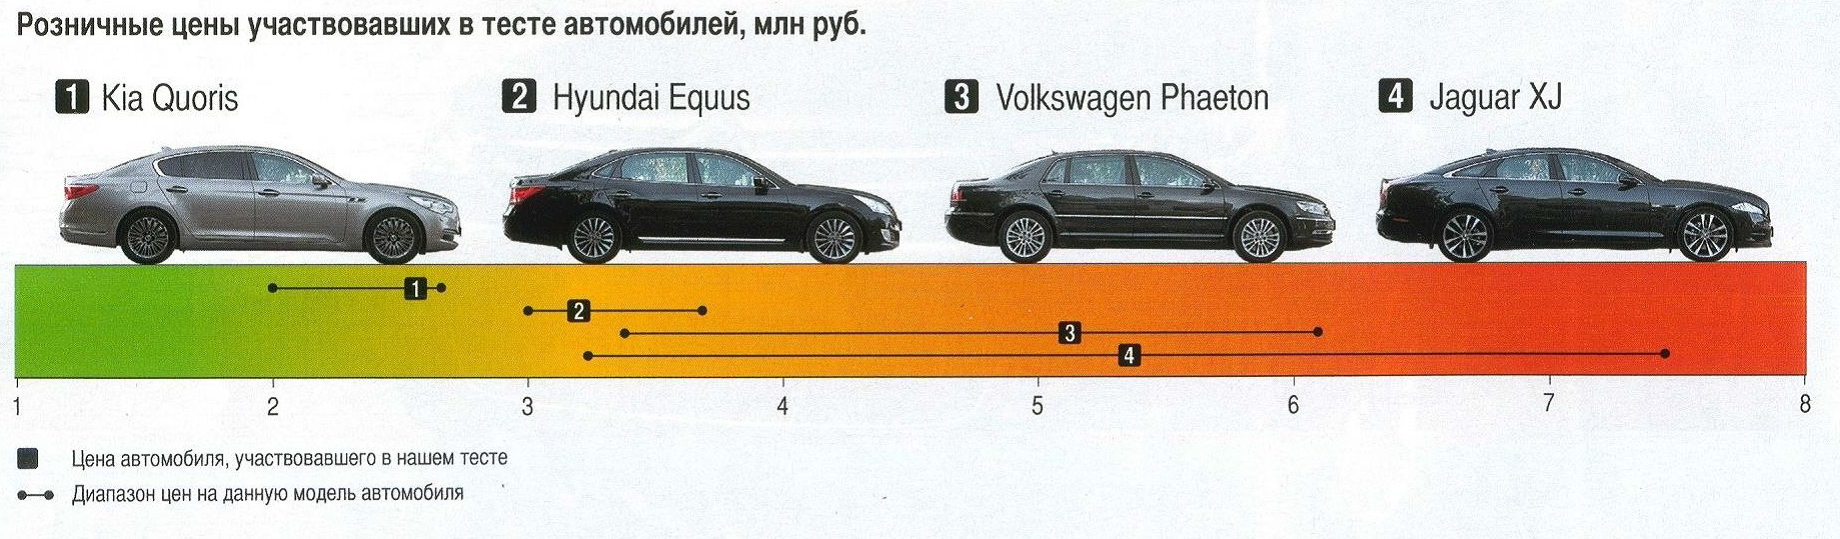 Тест VW Phaeton, Jaguar XJ, Hyundai Equus и Kia Quoris